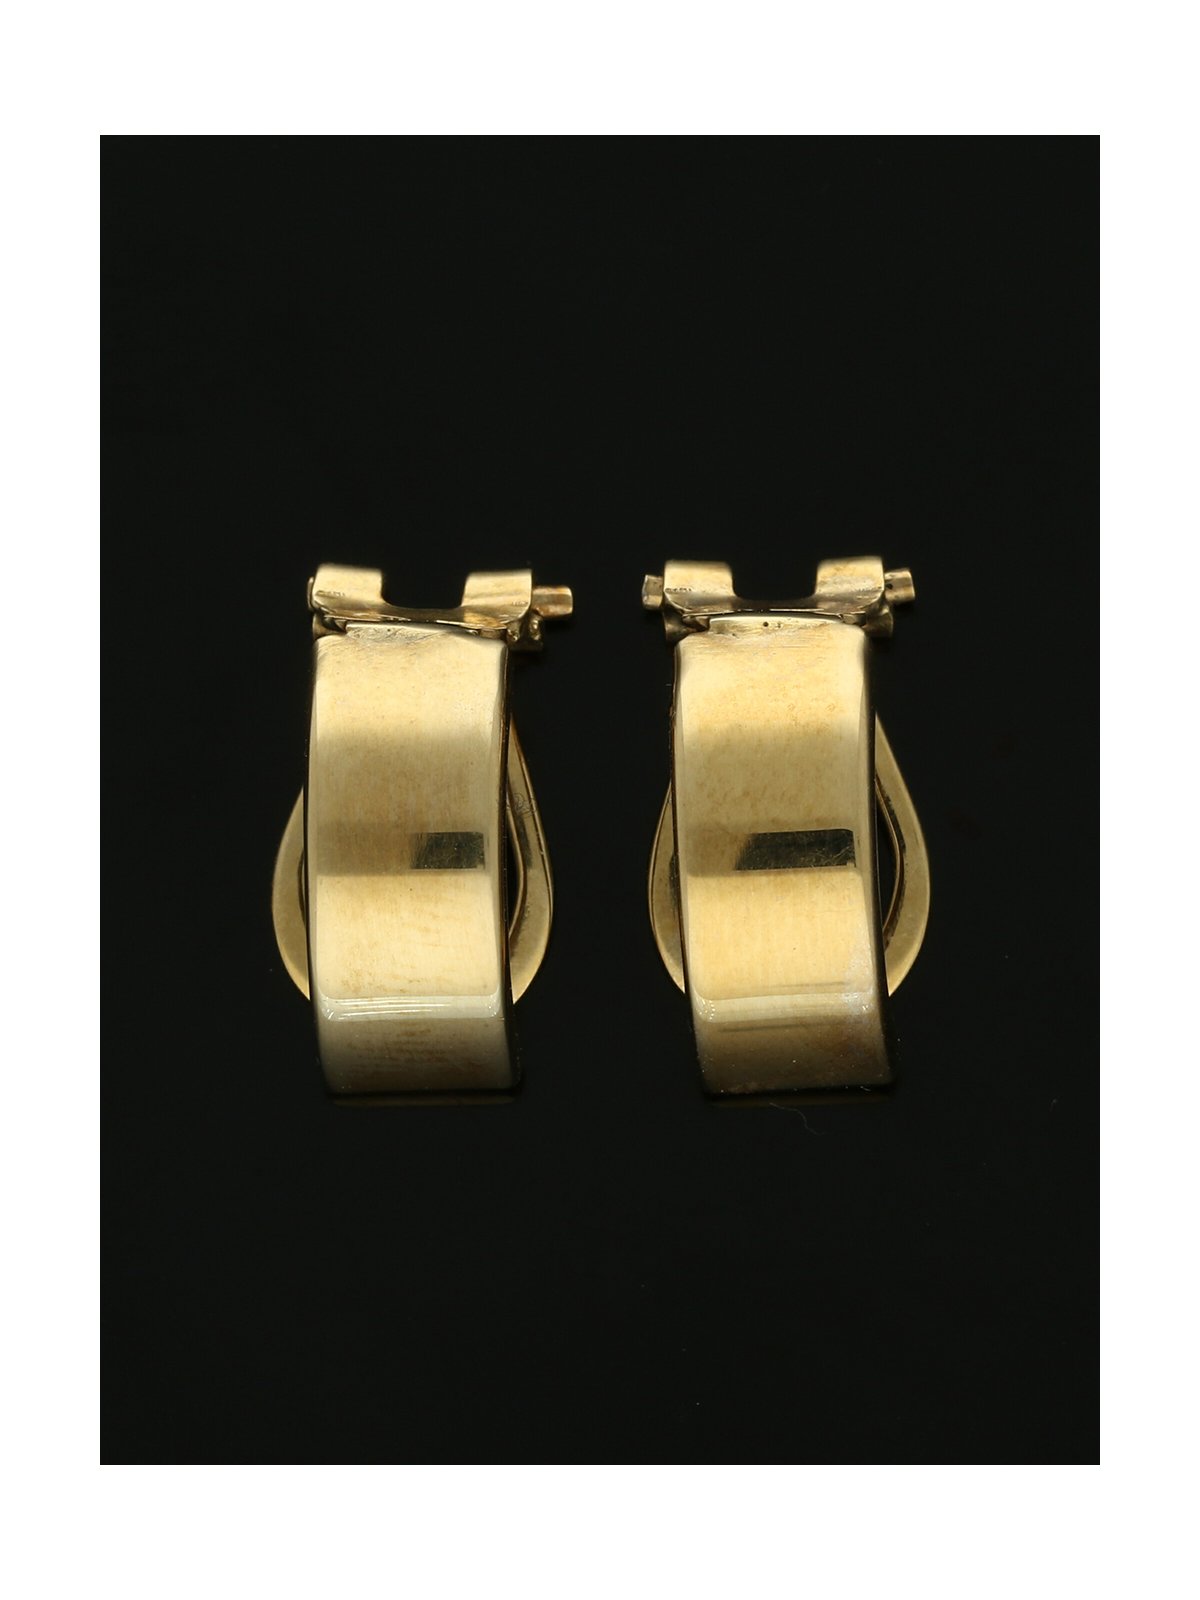 Clip Hoop Earrings 15x9mm  in 9ct Yellow Gold